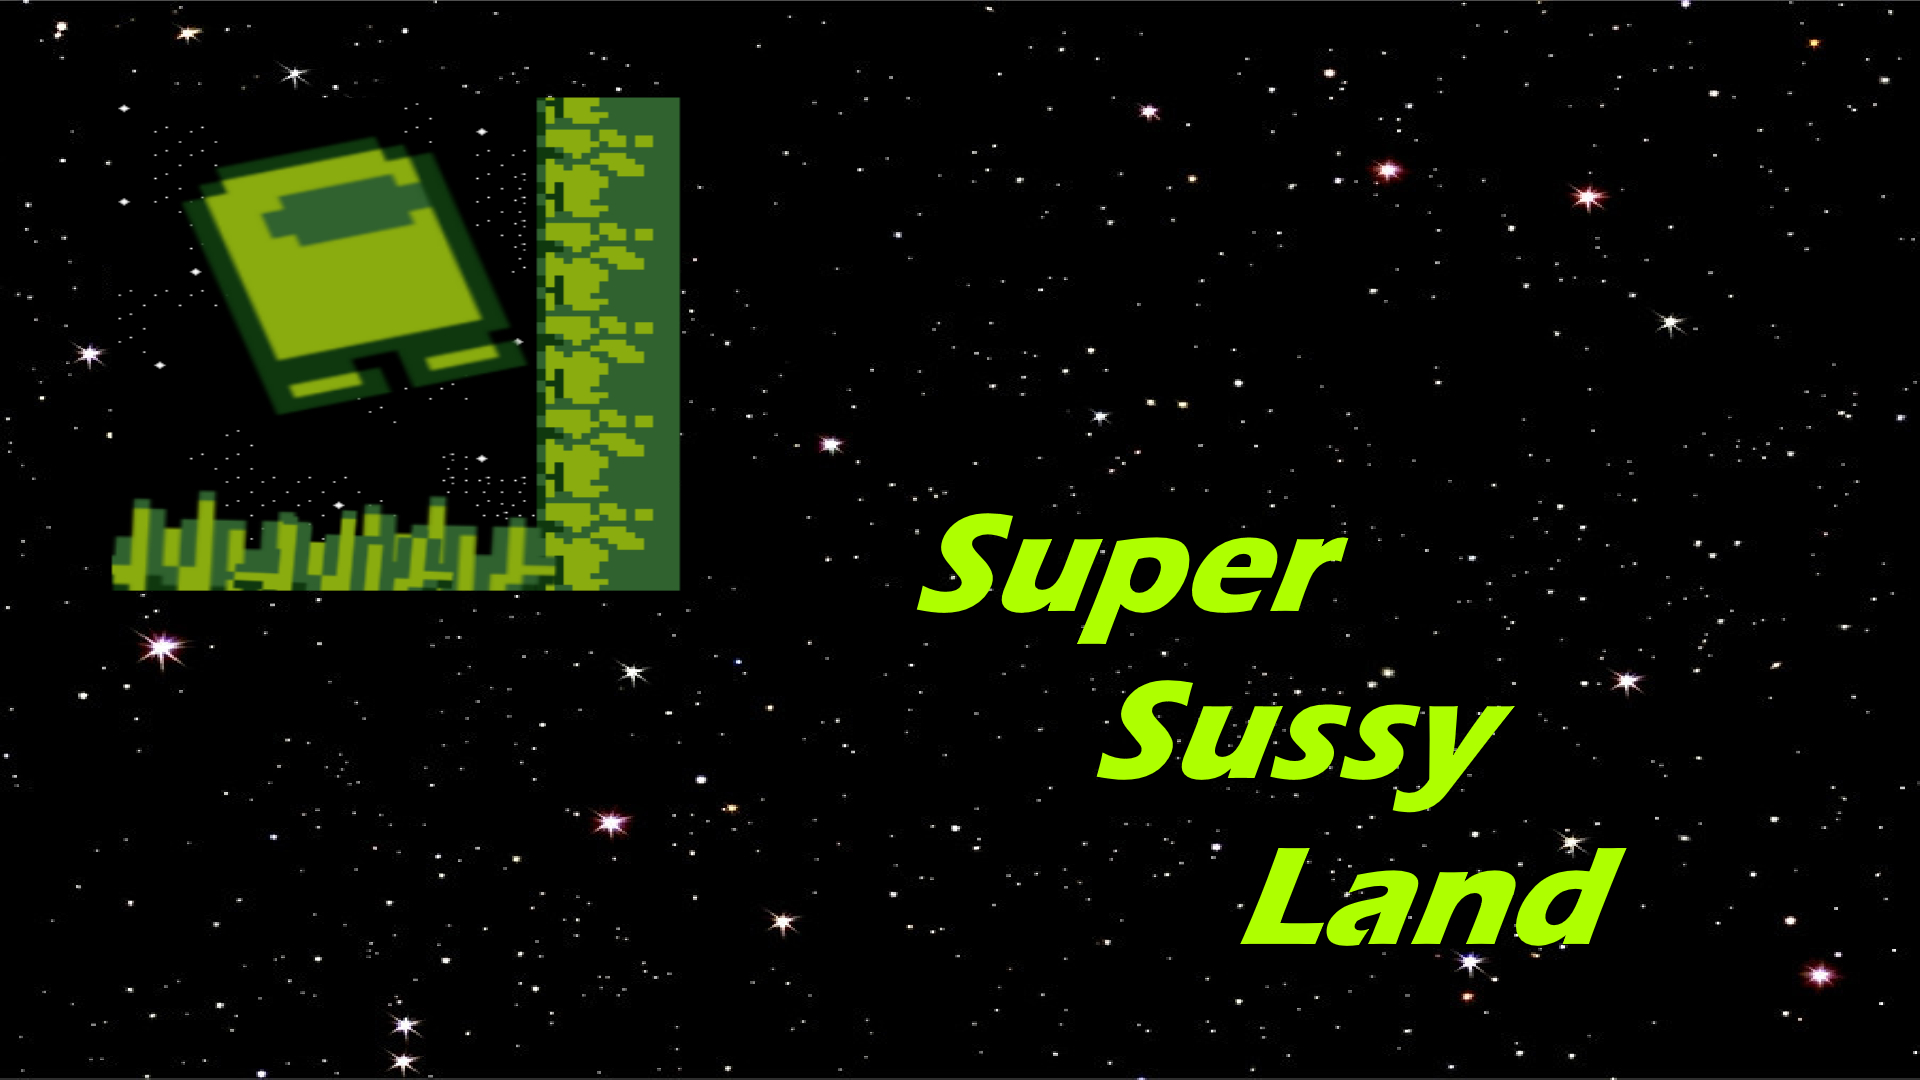 Super Sussy Land!